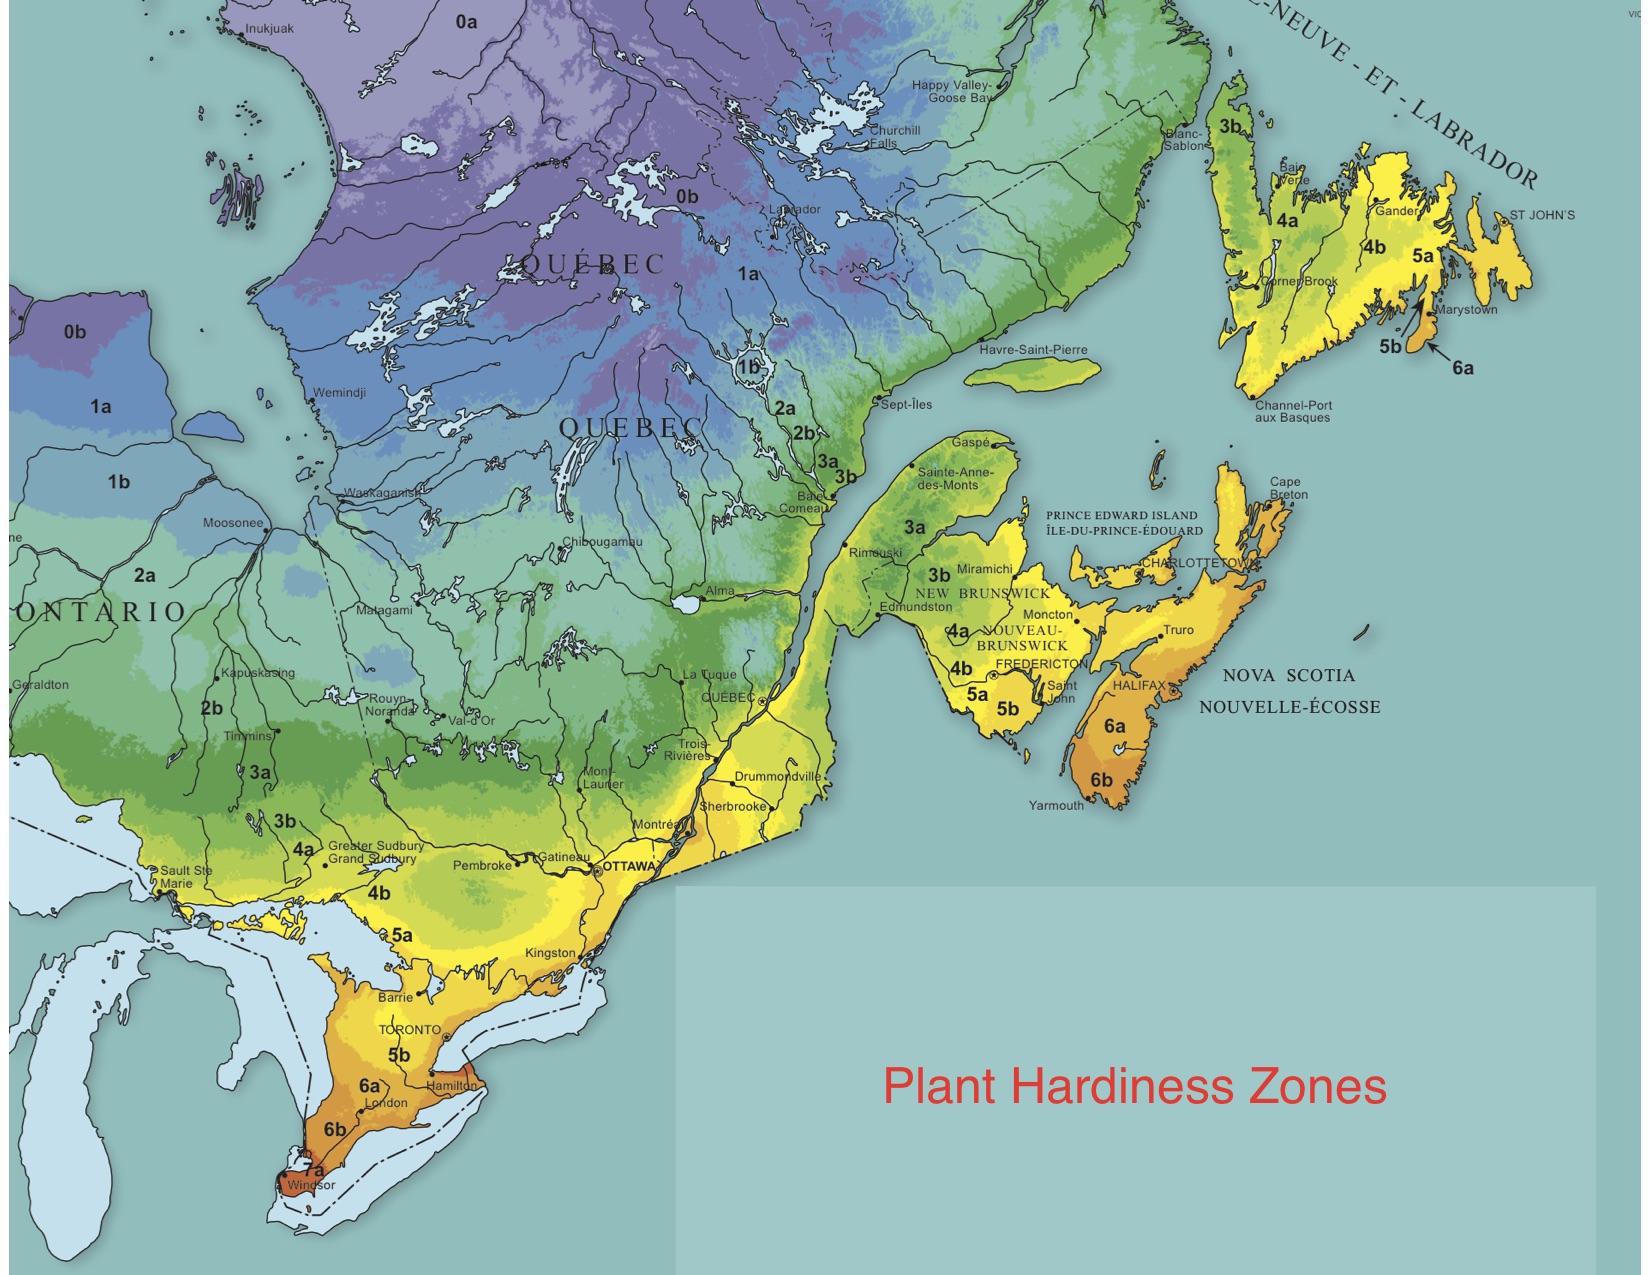 Plant hardiness zones - Eastern Canada